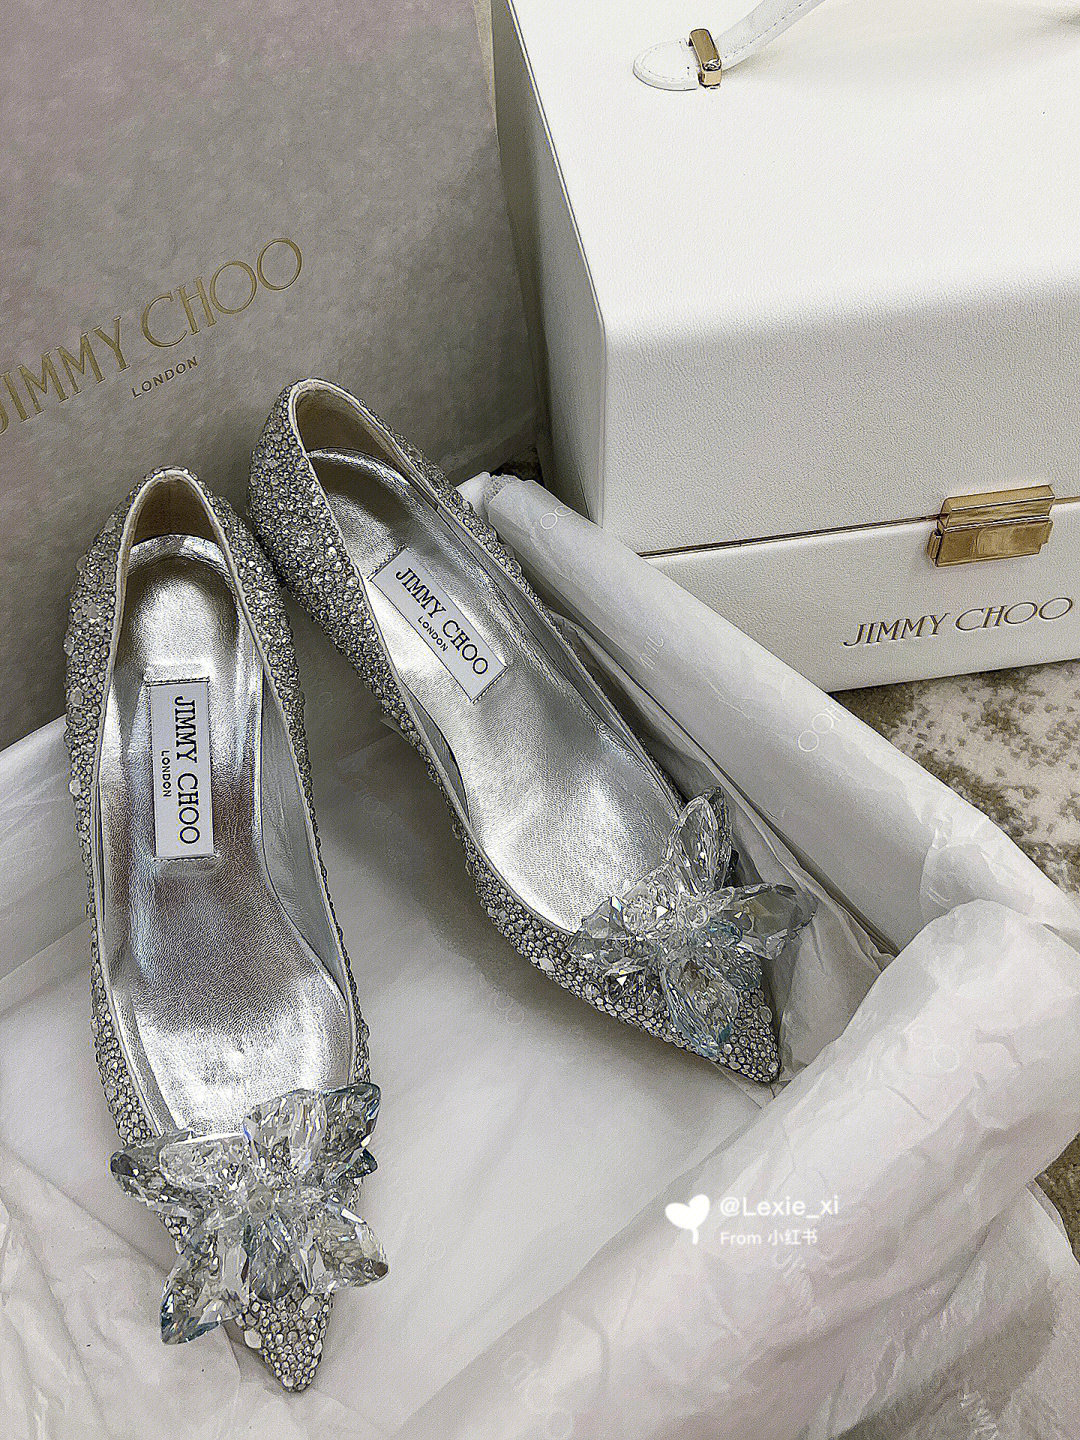 jimmychoo水晶鞋售价图片